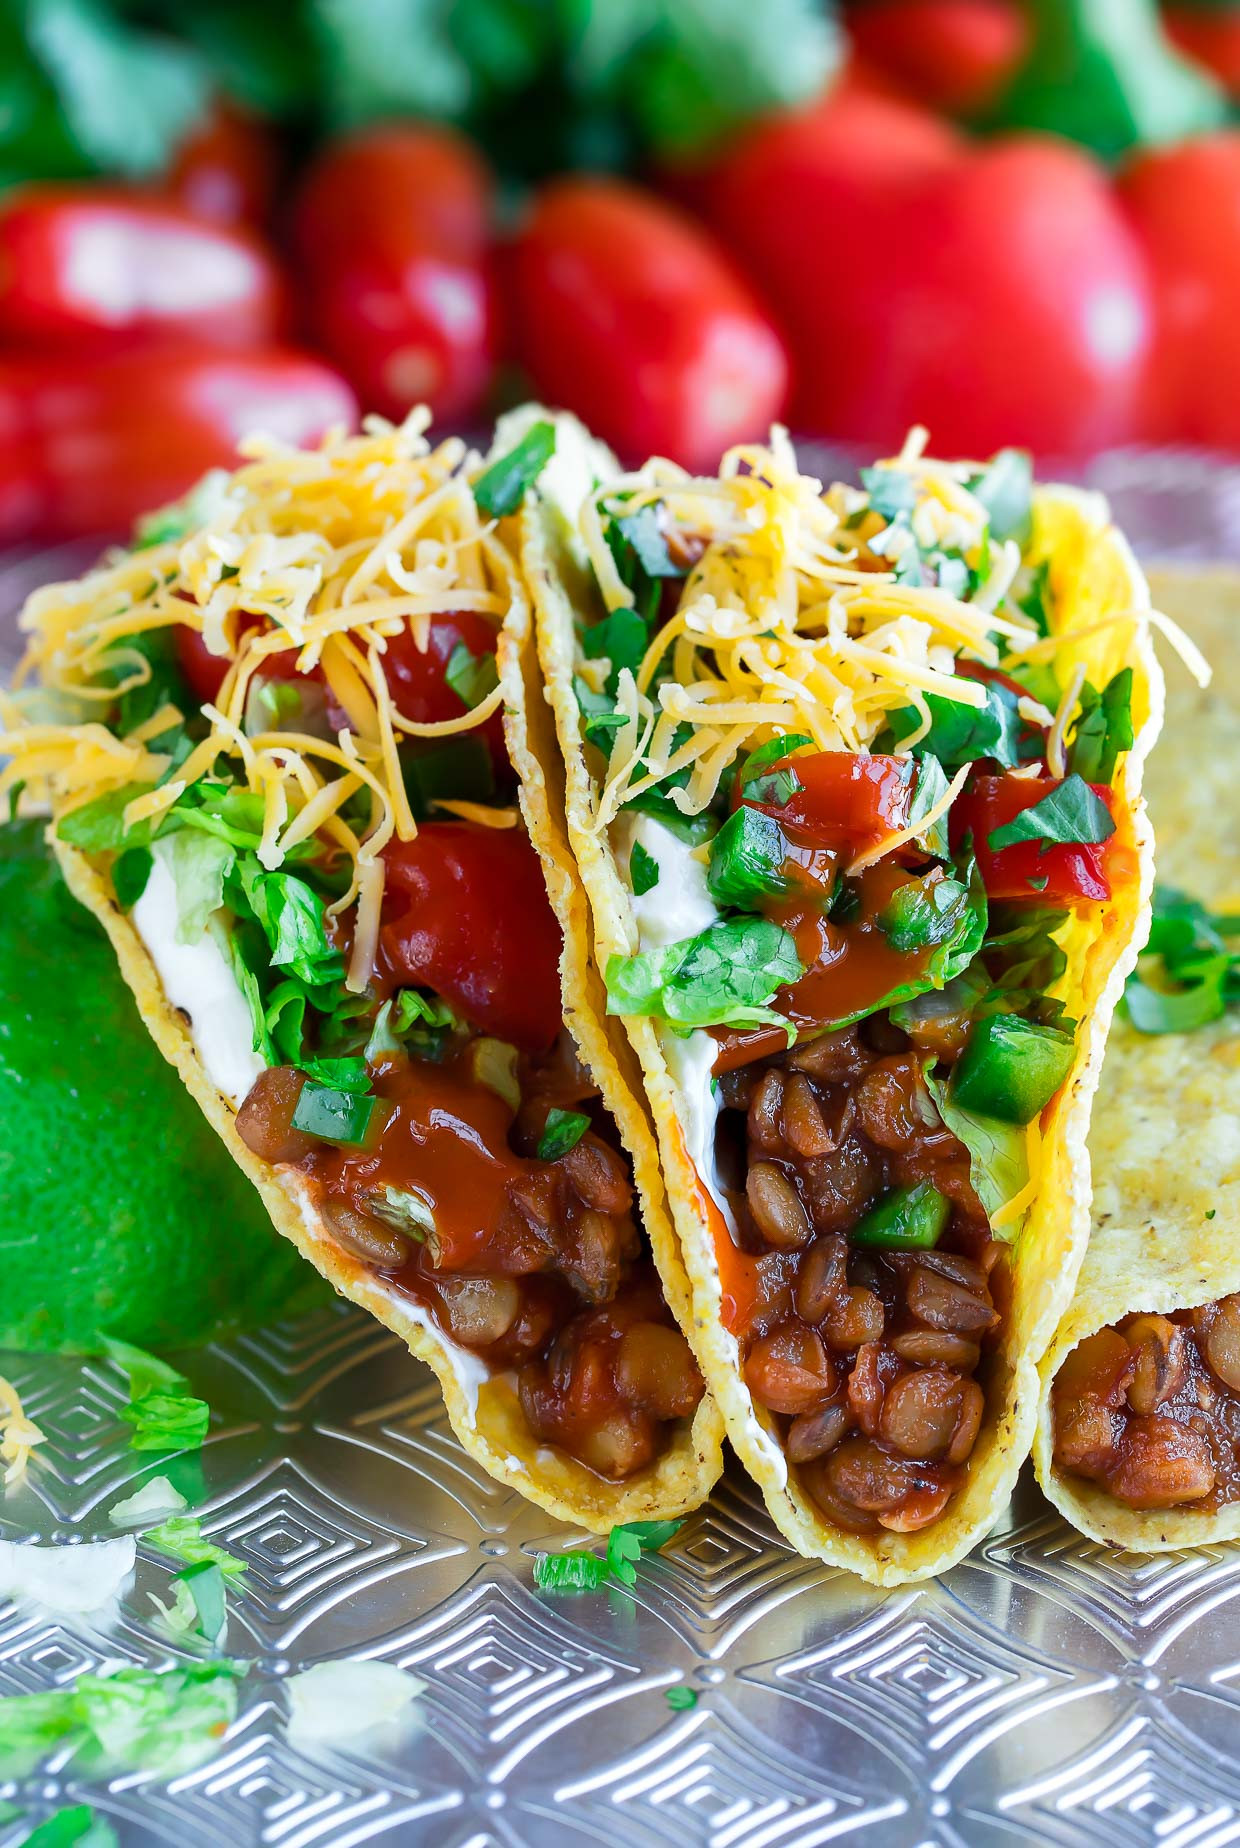 Vegan Taco Recipes
 Chipotle Lentil Tacos Tasty Ve arian Tacos with Twist